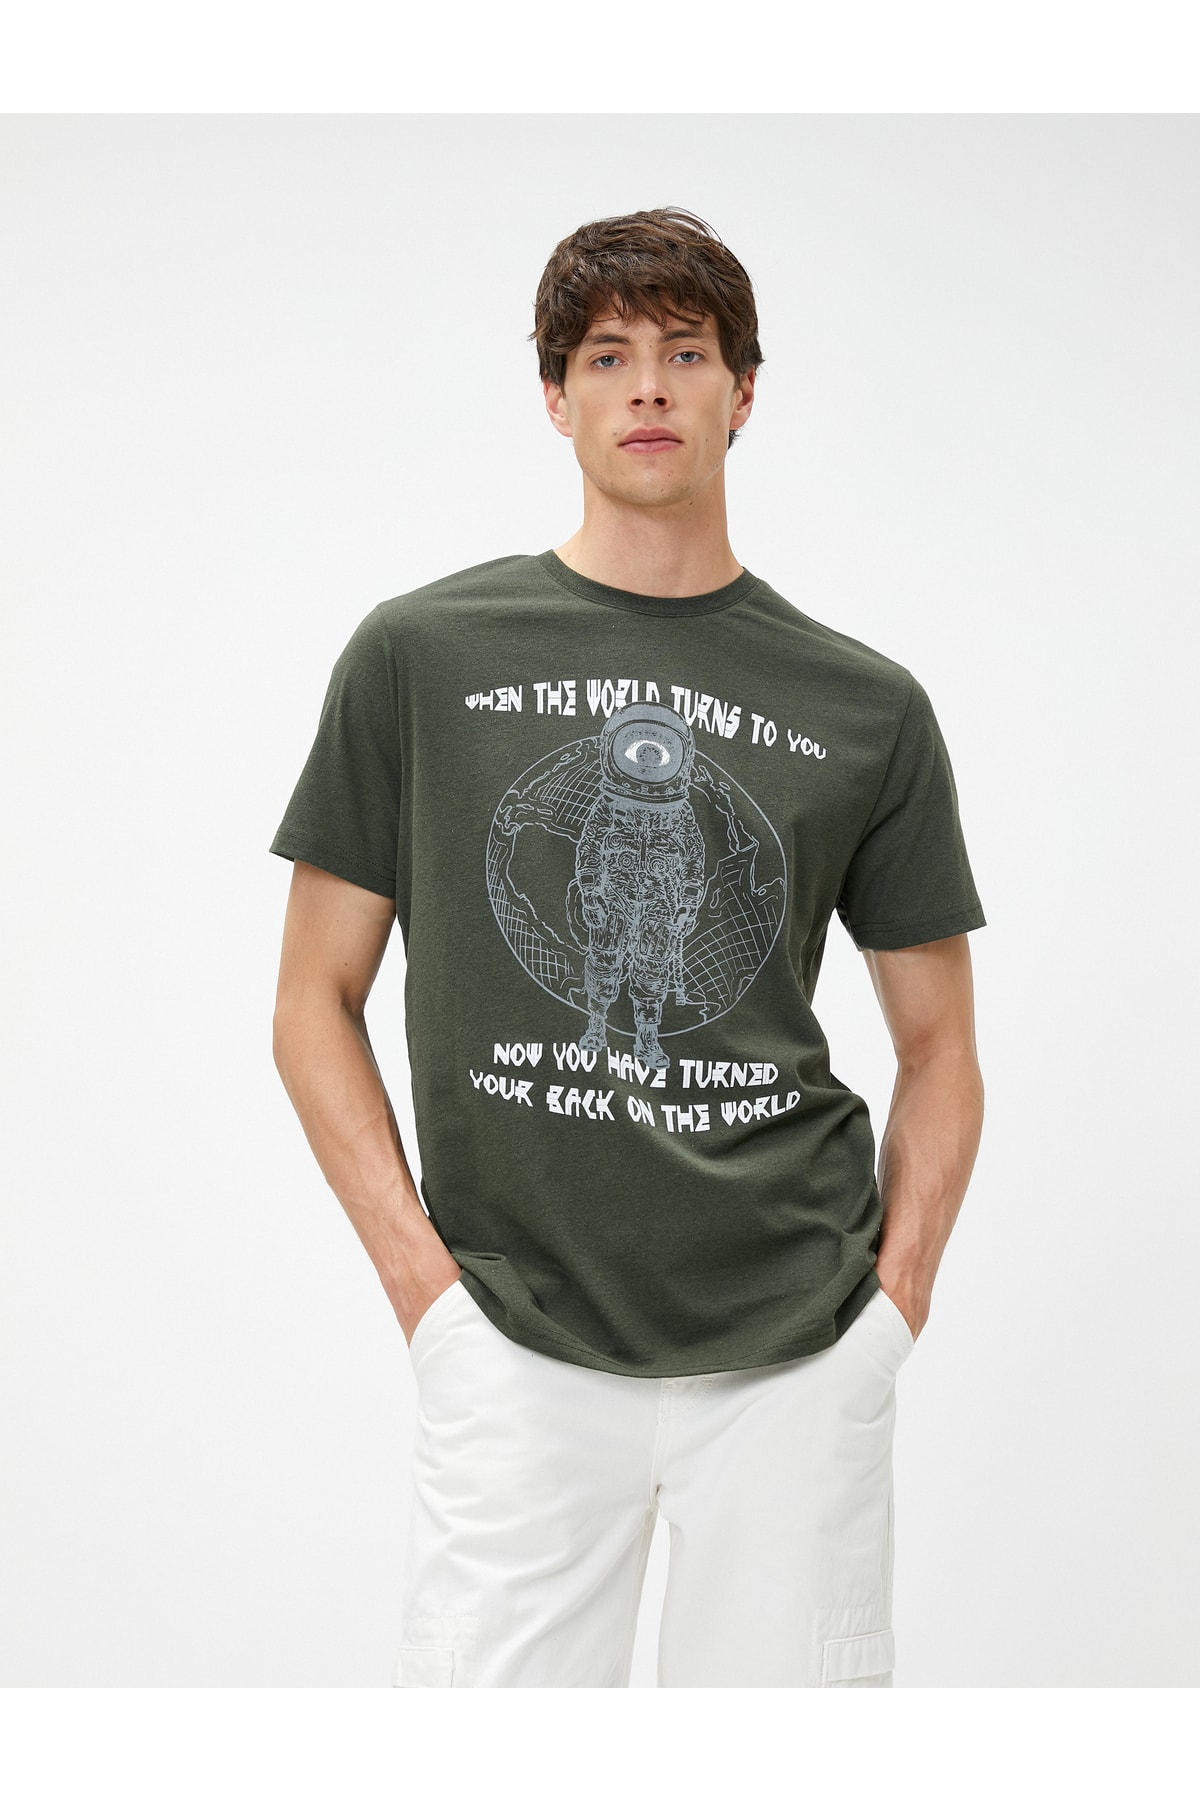 Koton Slogan Printed T-Shirt, Crew Neck Space Theme, Short Sleeves.